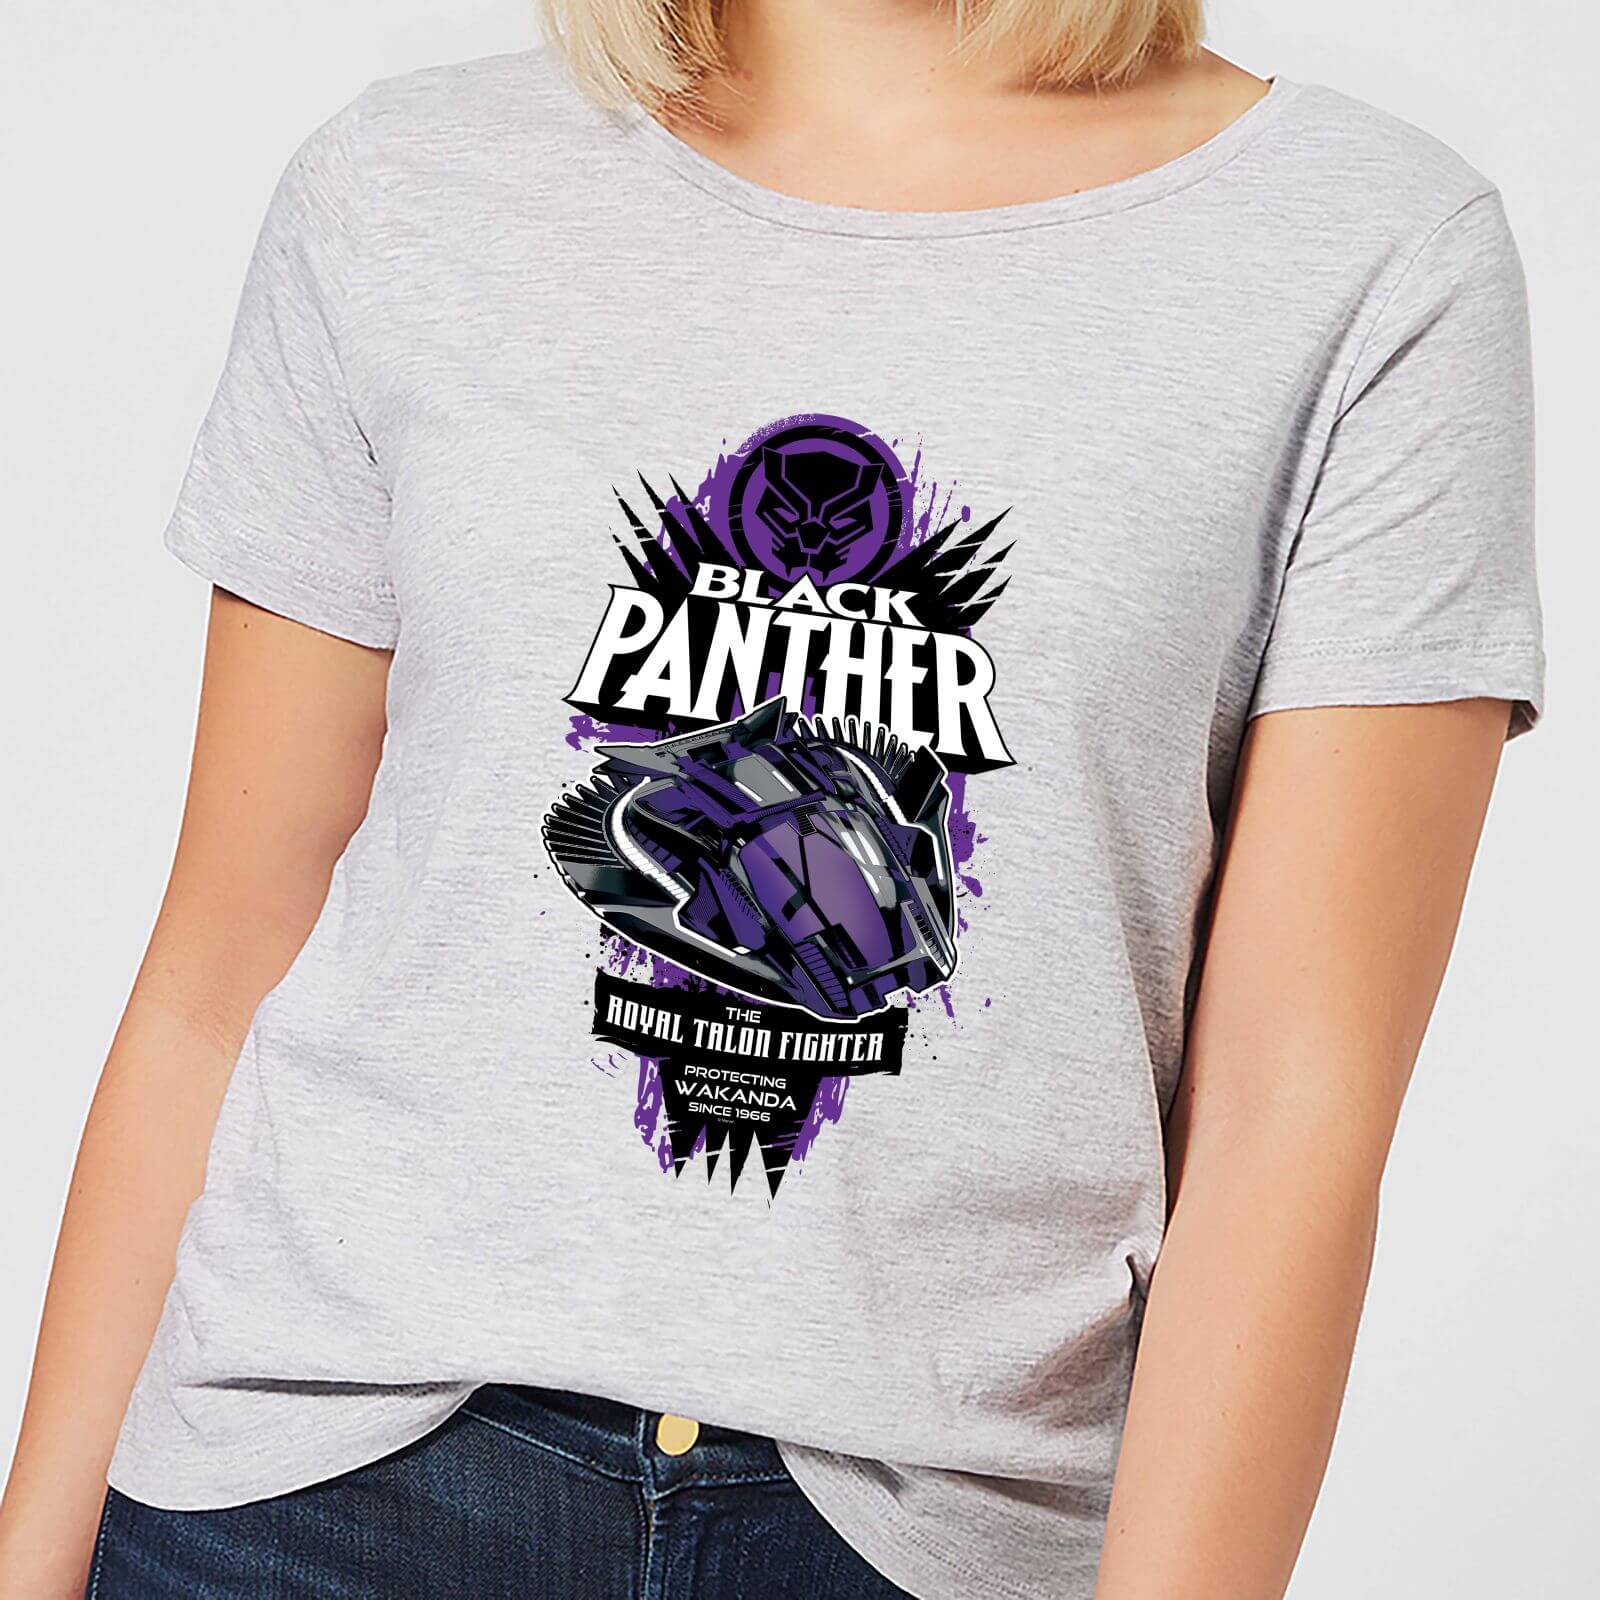 Marvel Black Panther The Royal Talon Fighter Badge Women